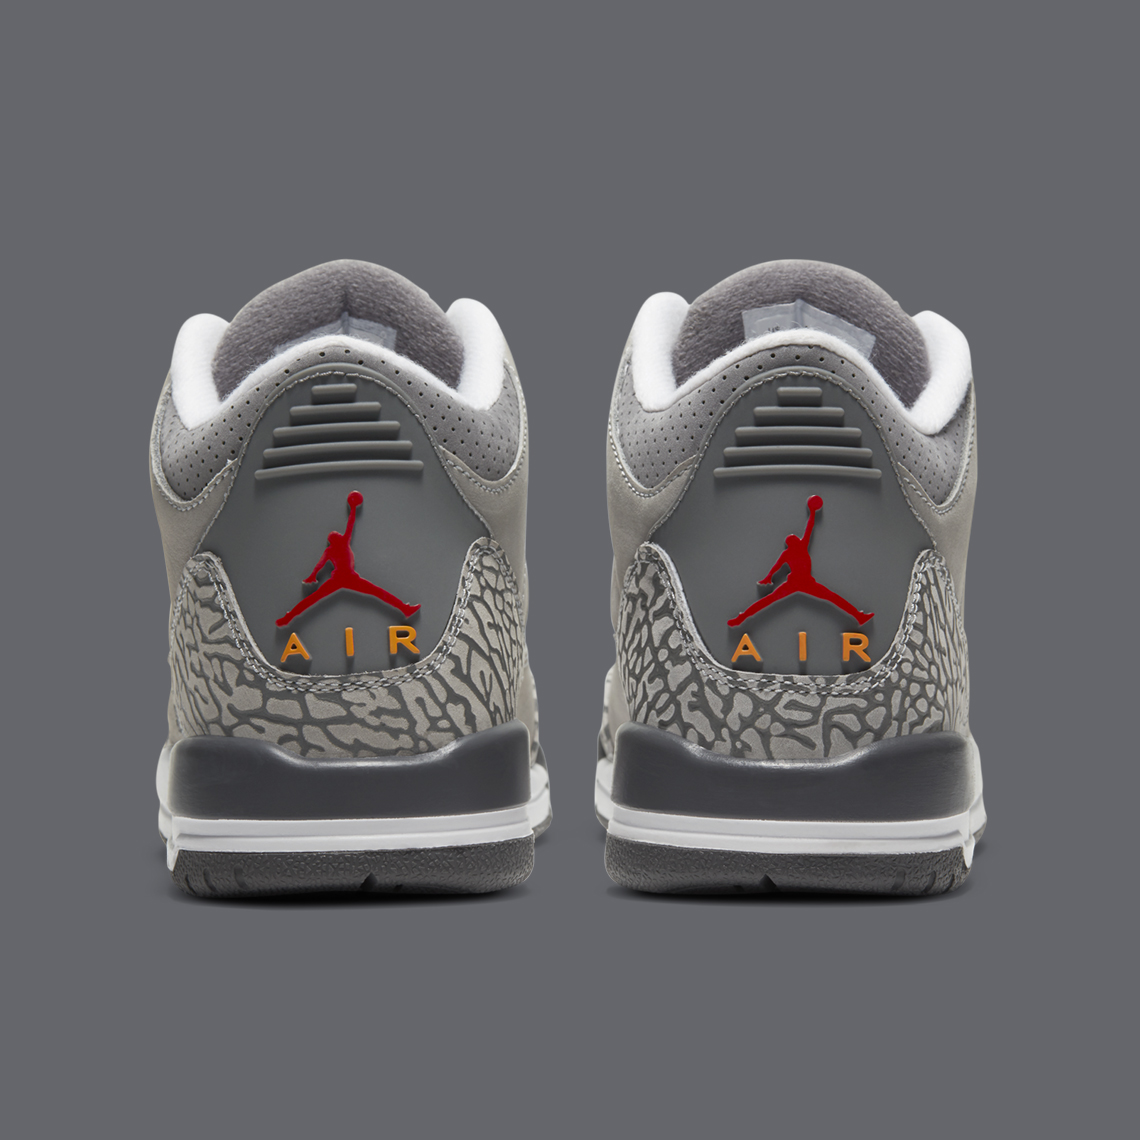 Air Jordan 3 Retro Gs Cool Grey 398614 012 Official Images 7